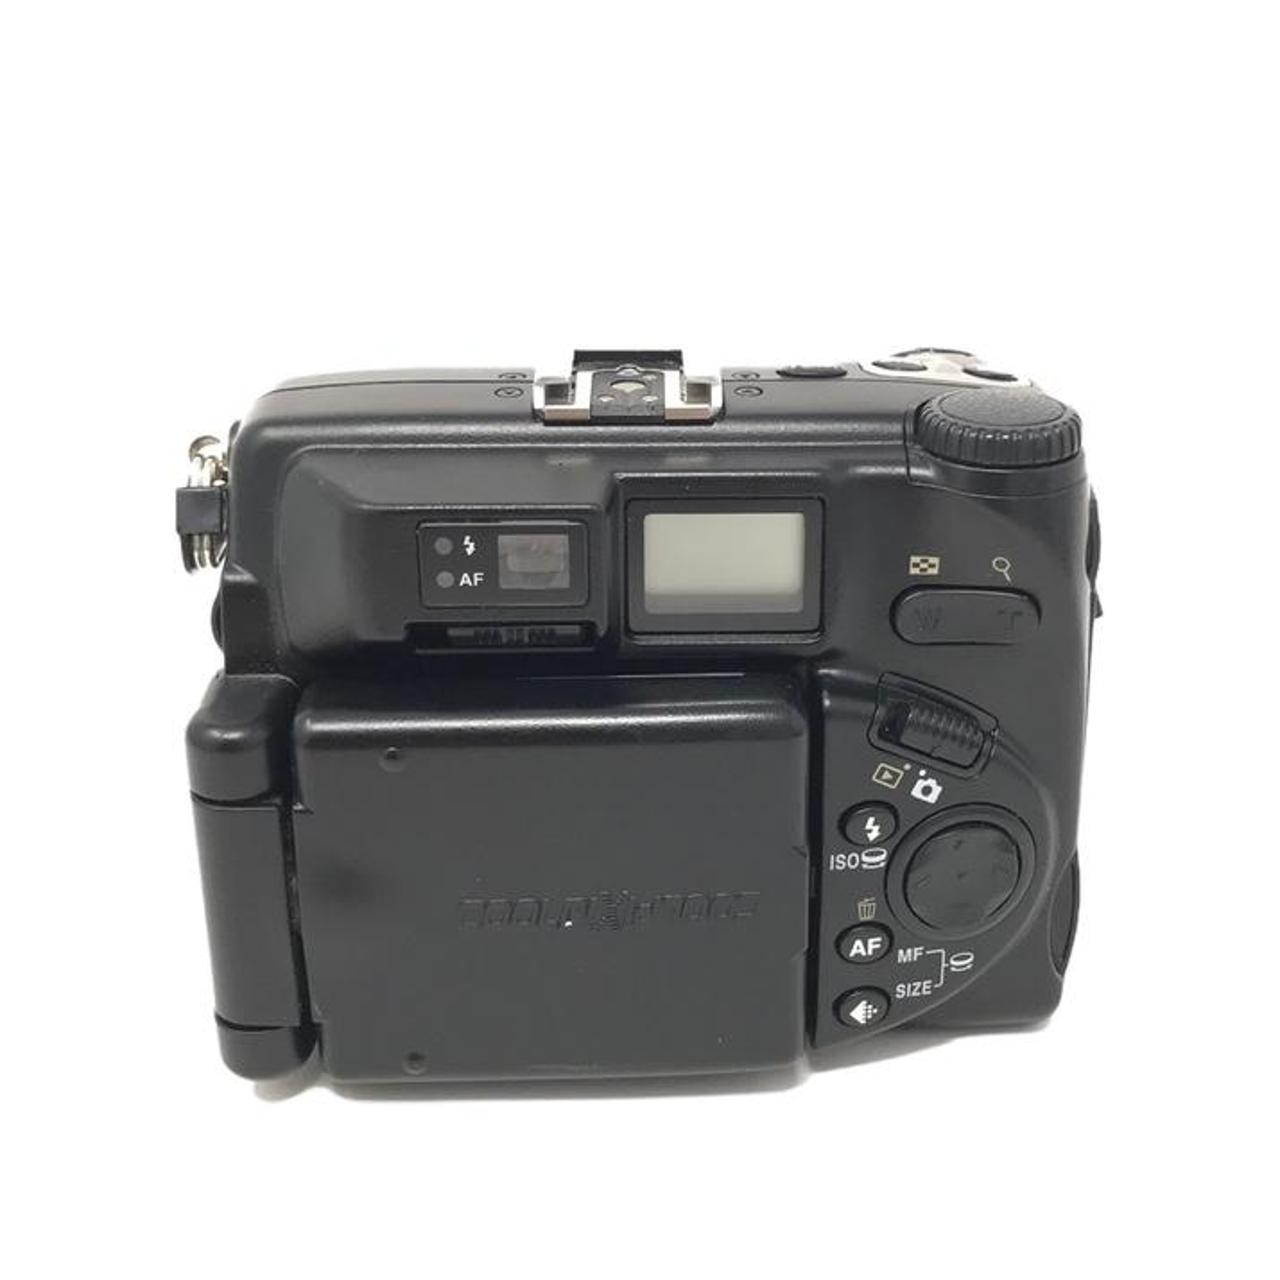 Product Image 3 - Nikon Coolpix 5000 Digital Camera

Comes